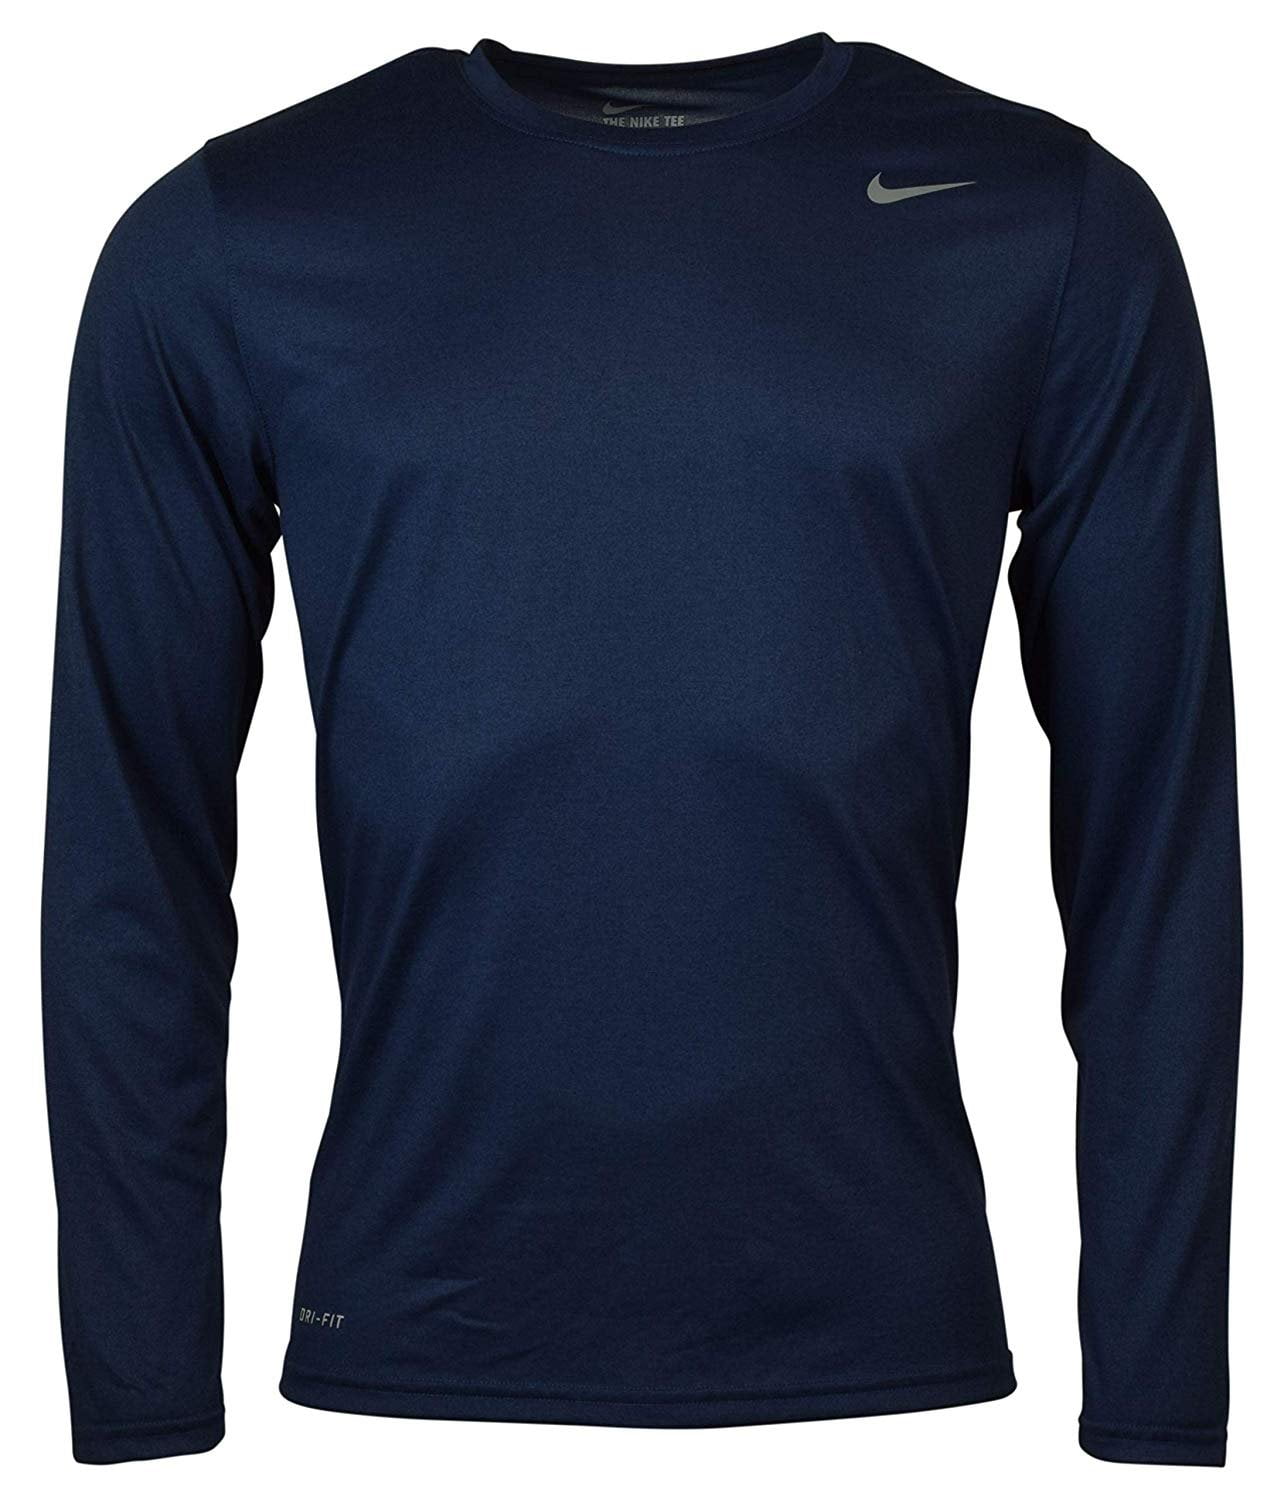 Nike Men's Dry Training Black Top Large T-Shirt - Walmart.com